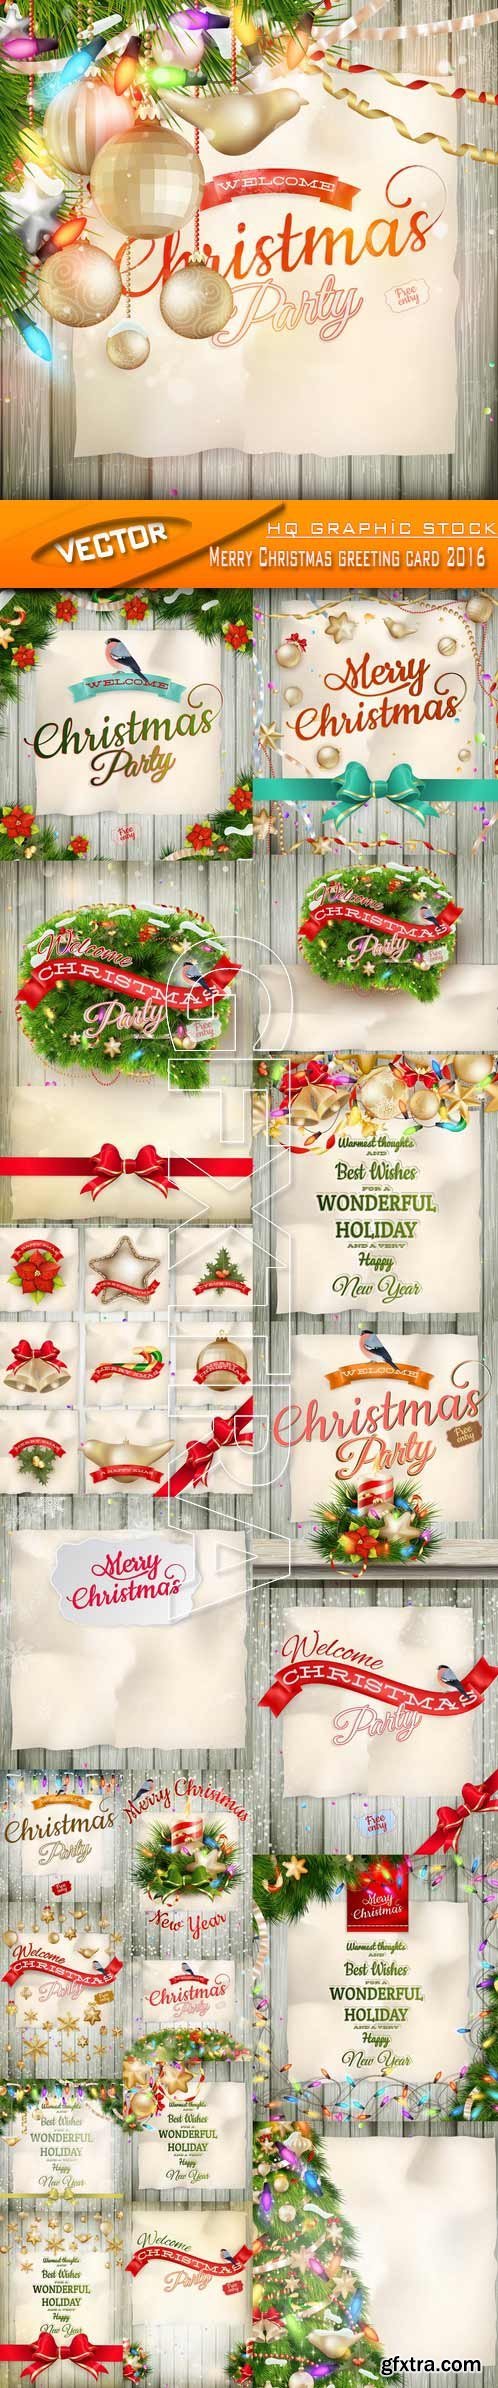 Stock Vector - Merry Christmas greeting card 2016